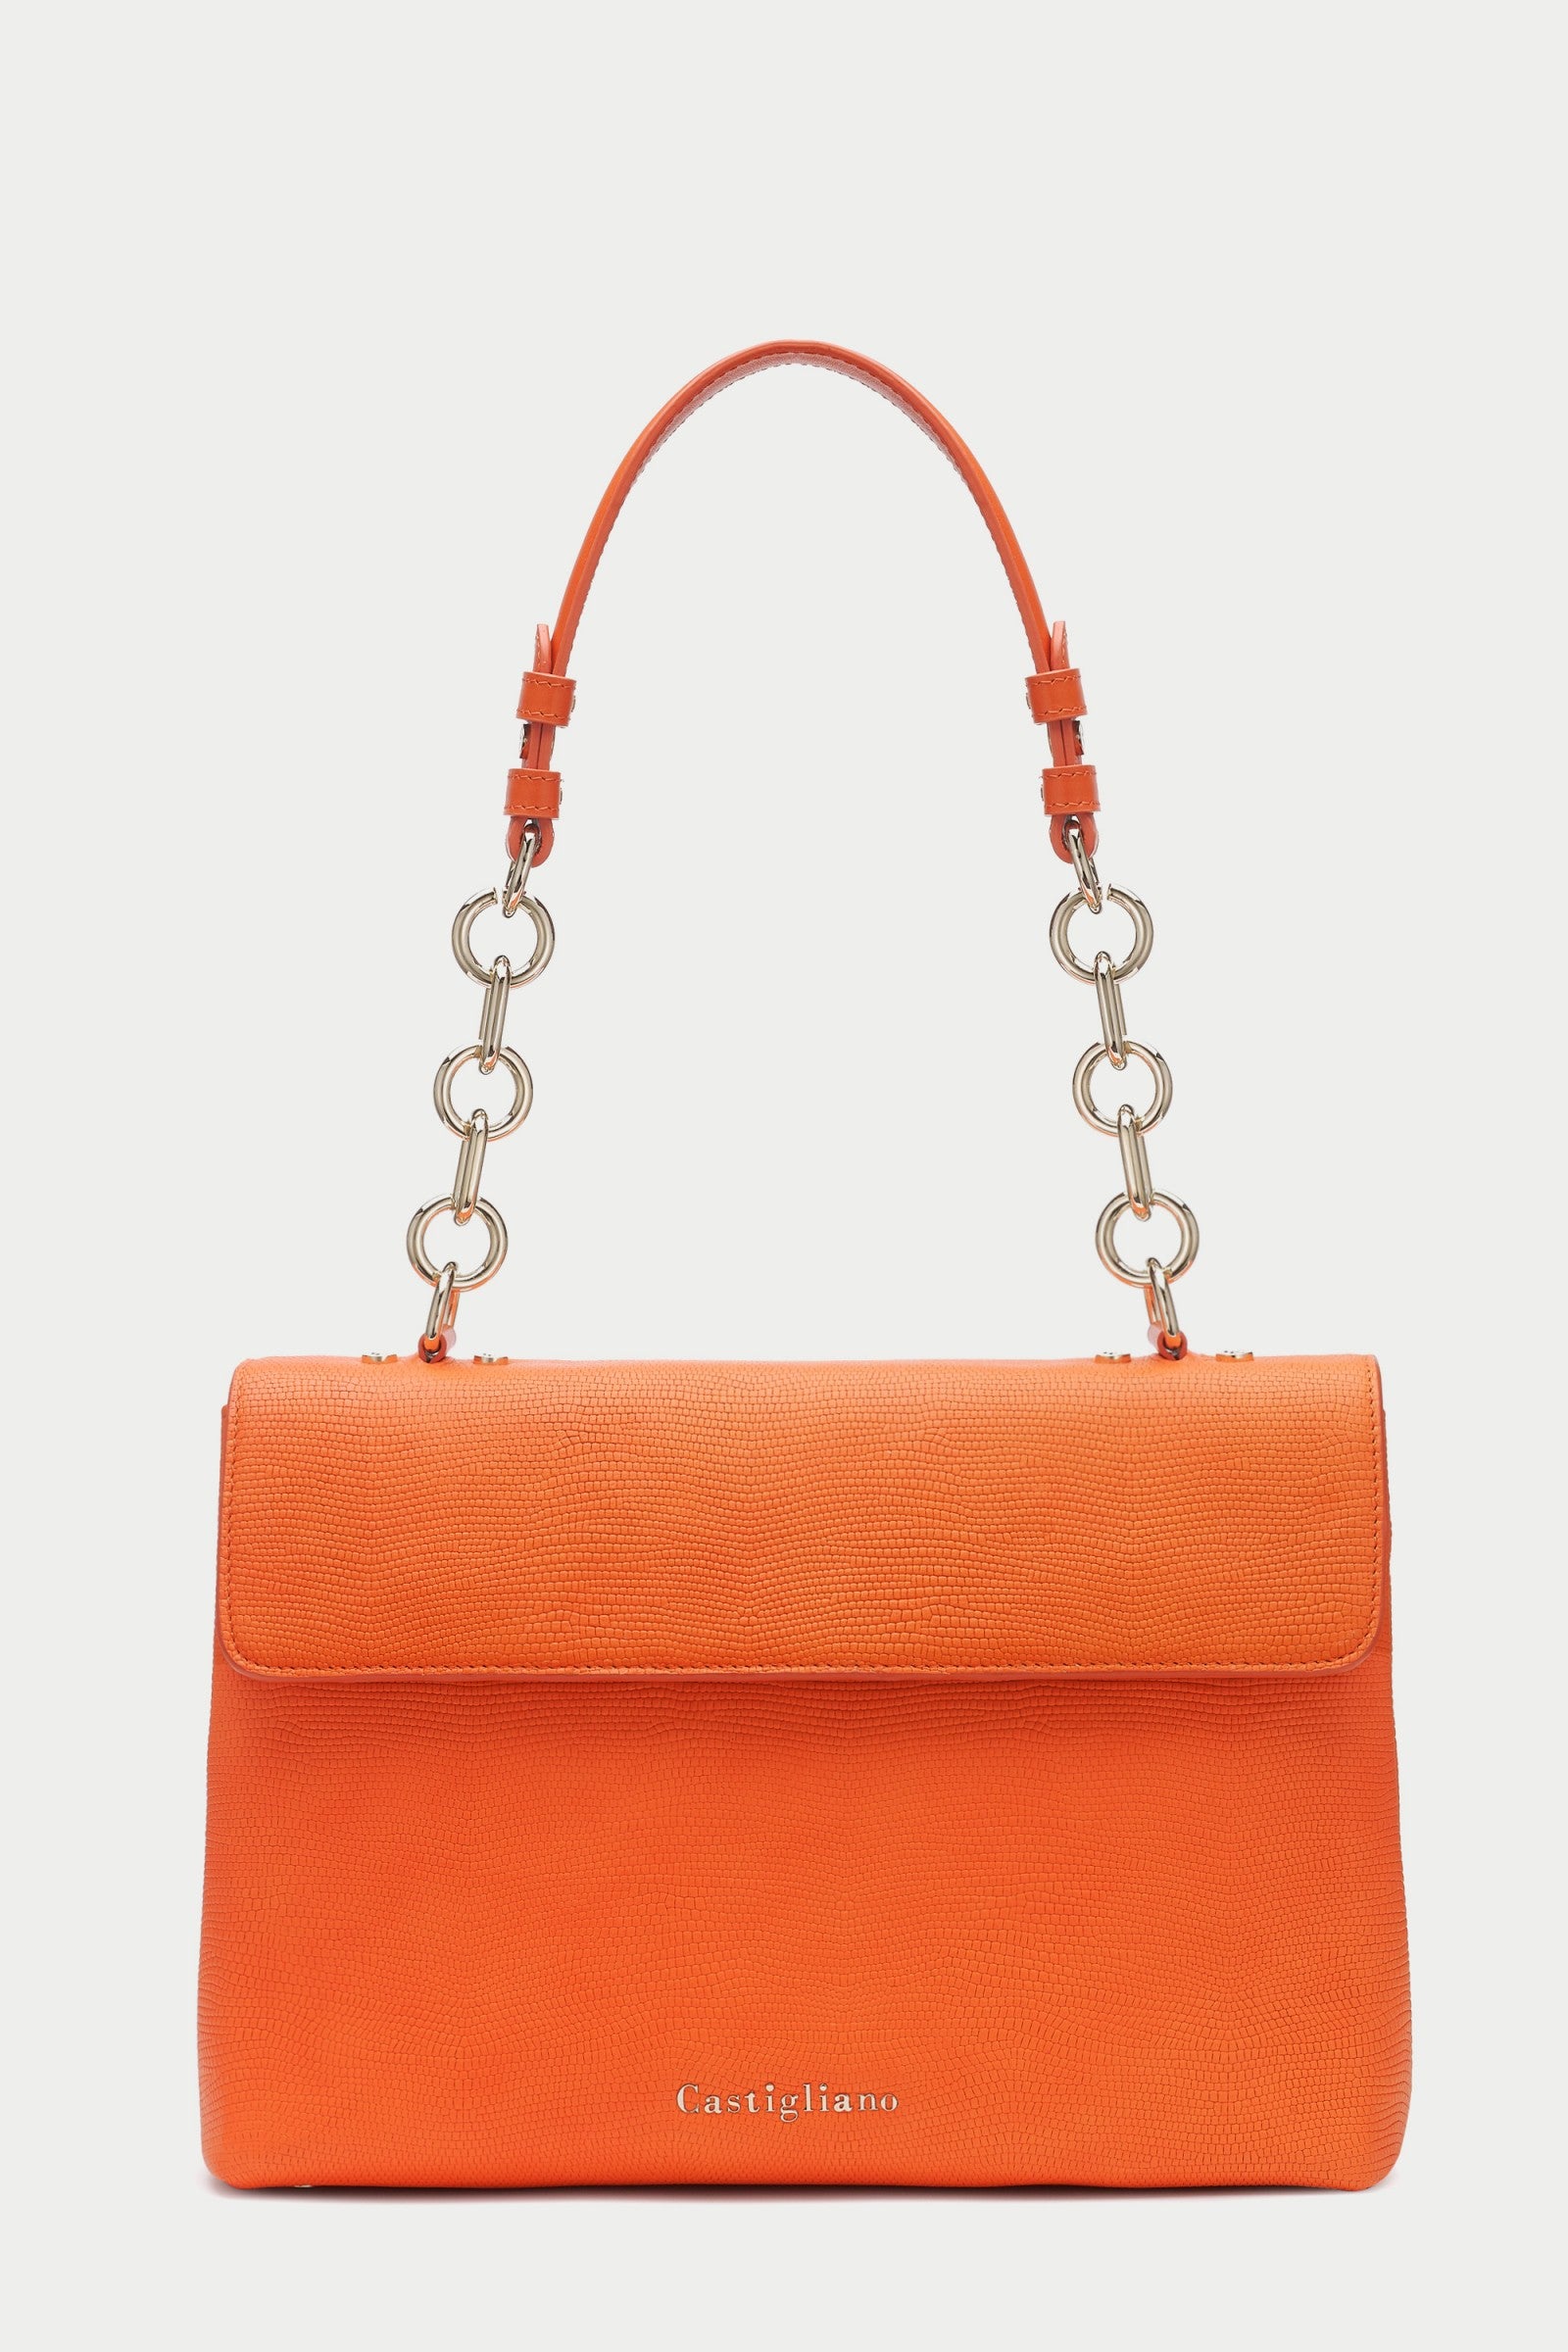 Briella MANDARINO Leather Handbag